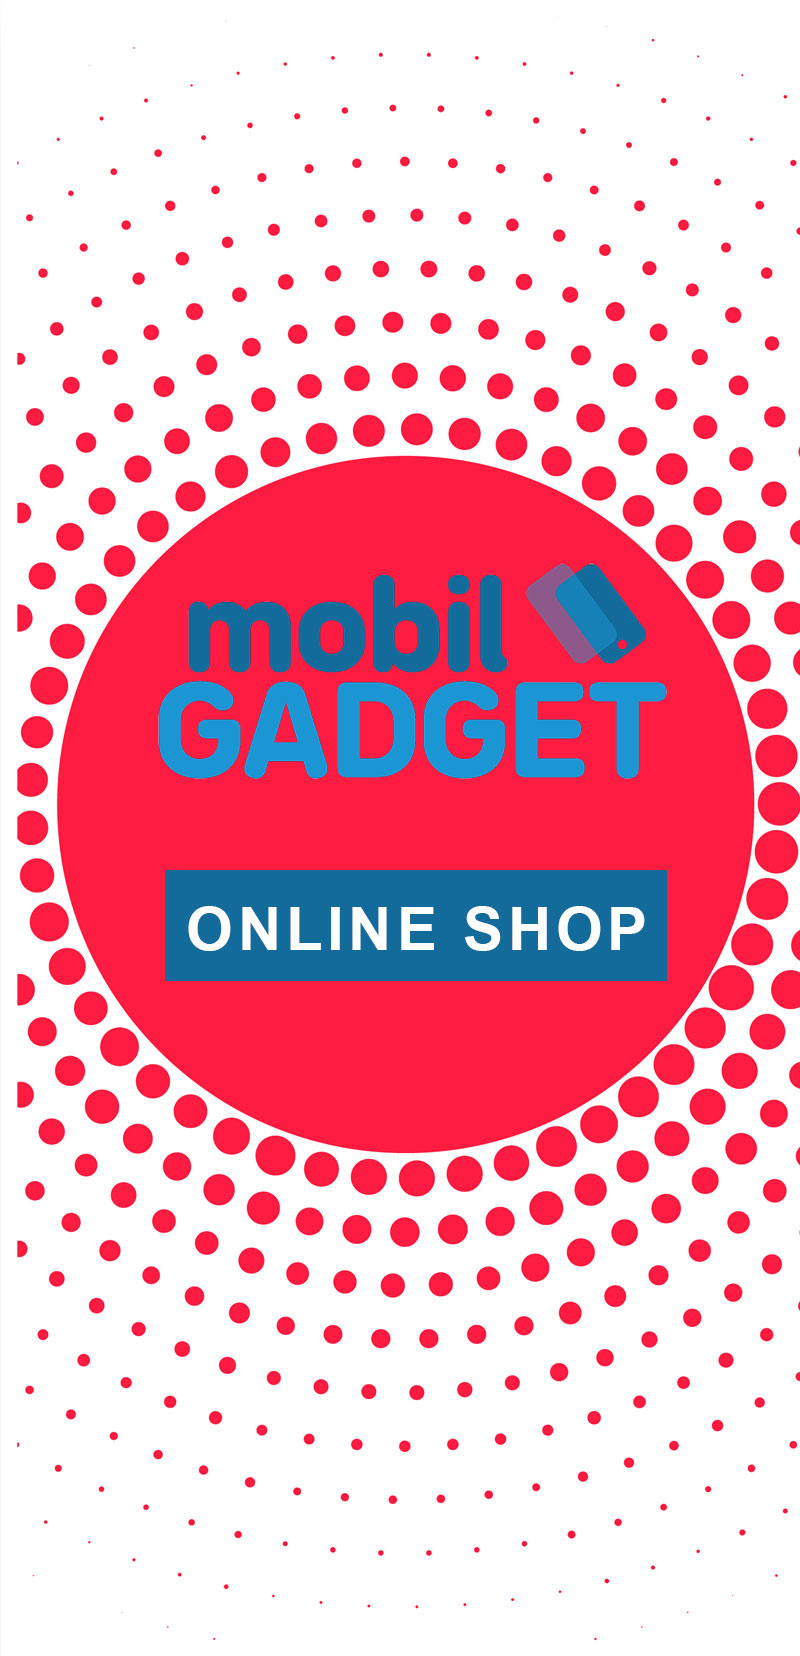 Mobil Gadget ONLINE SHOP